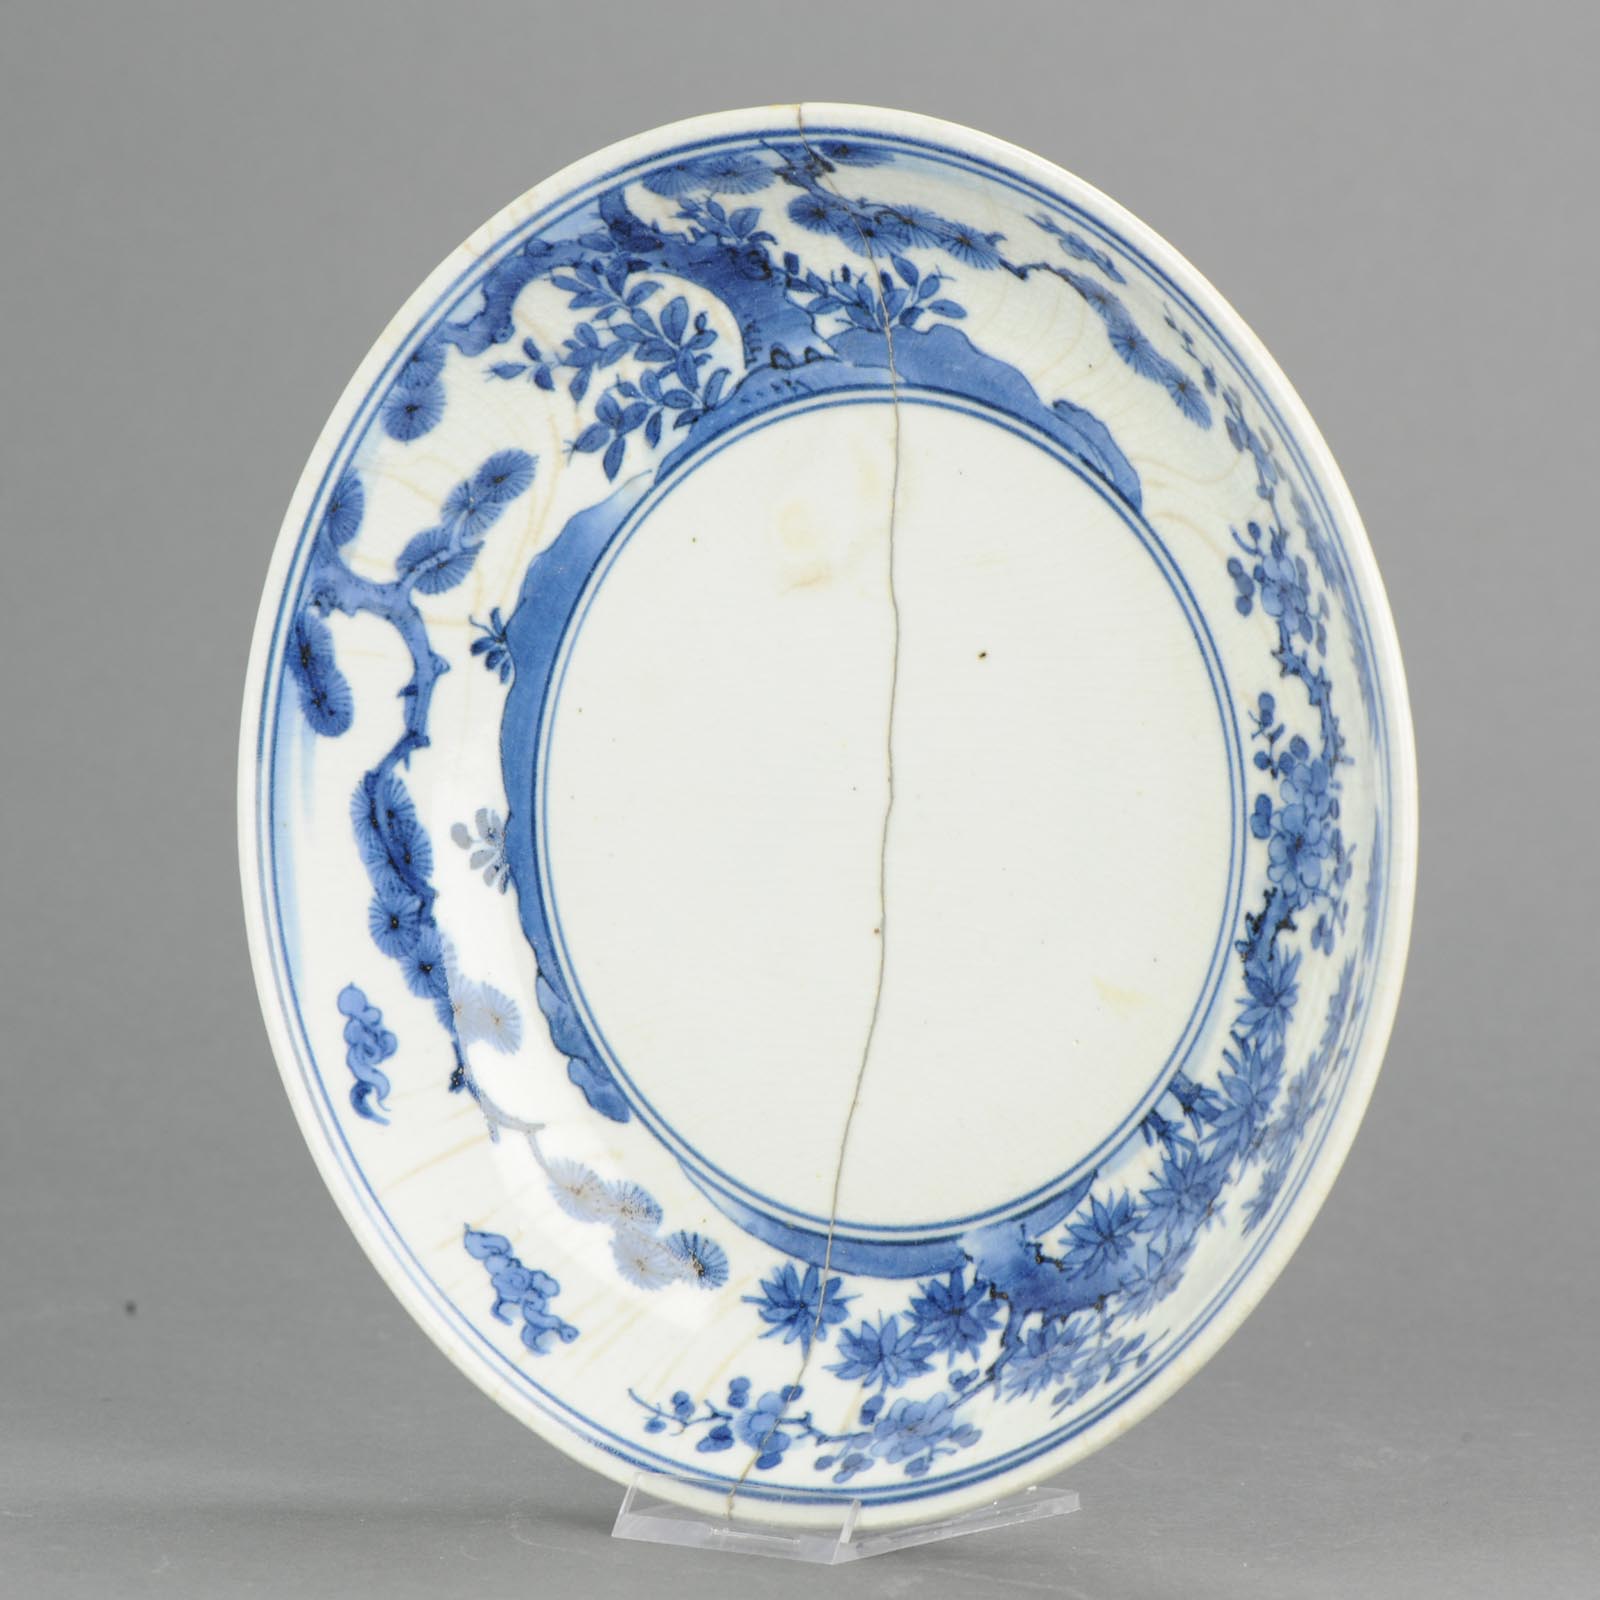 Antique 17th century Japanese Edo Plate Period 1660-1690 Japan 